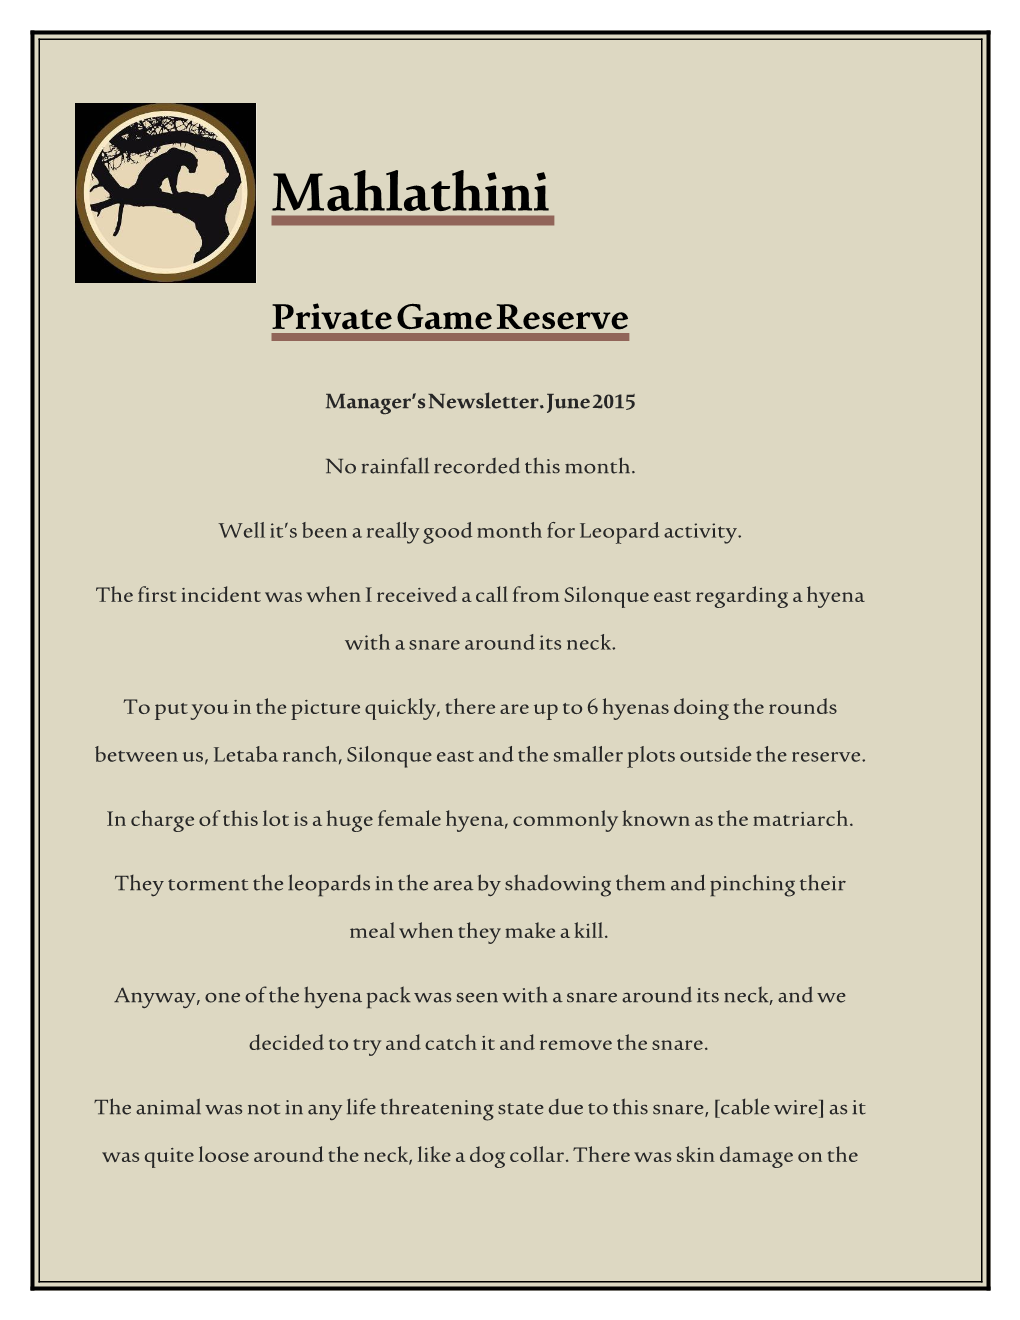 Mahlathini Private Game Reserve